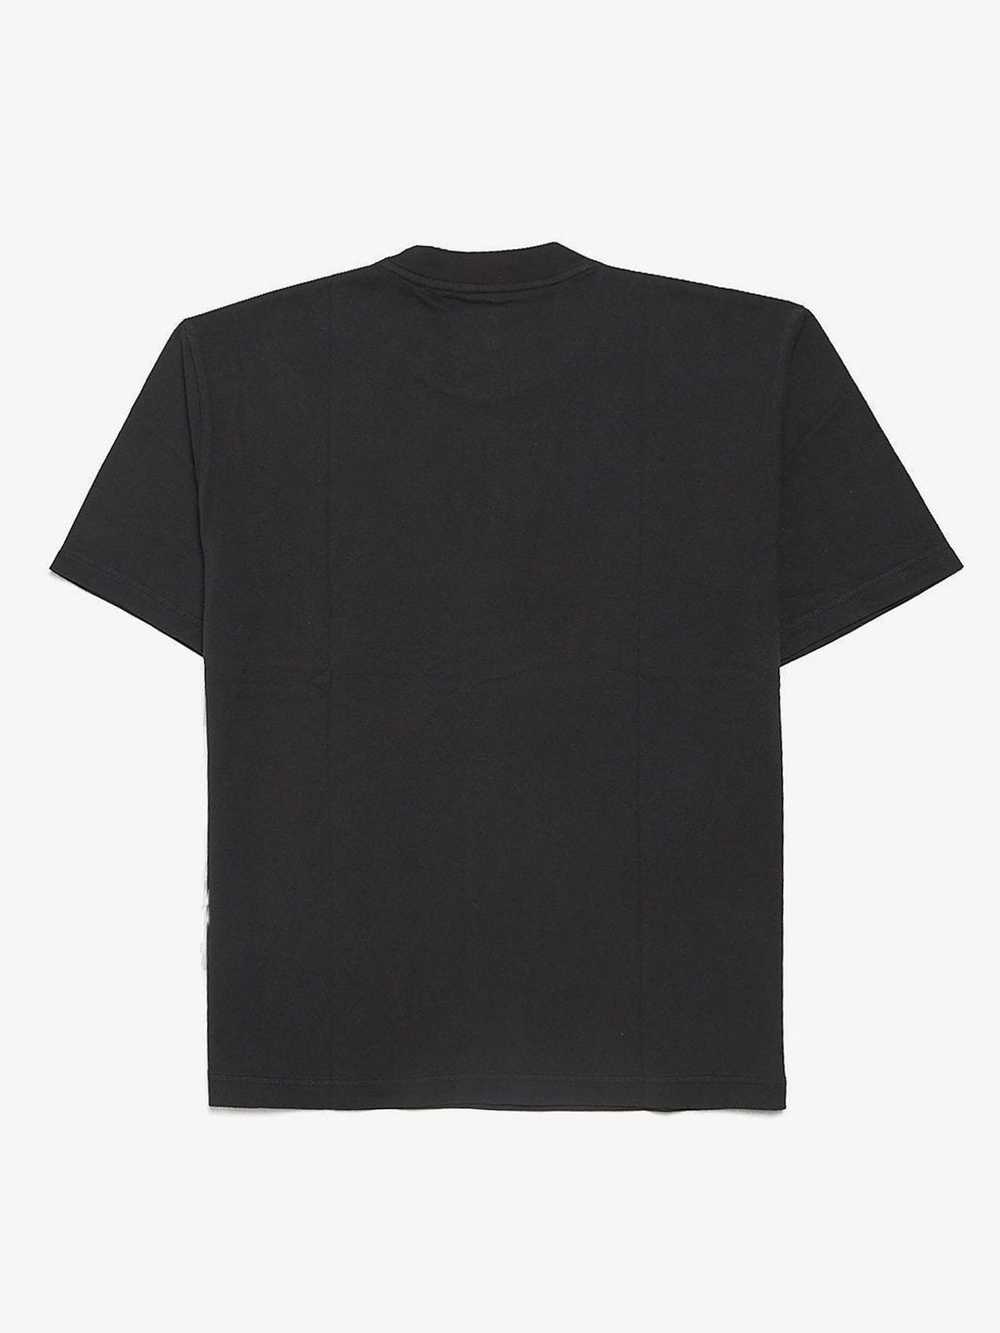 Yeezy Season Black Oversized T-Shirt - image 2